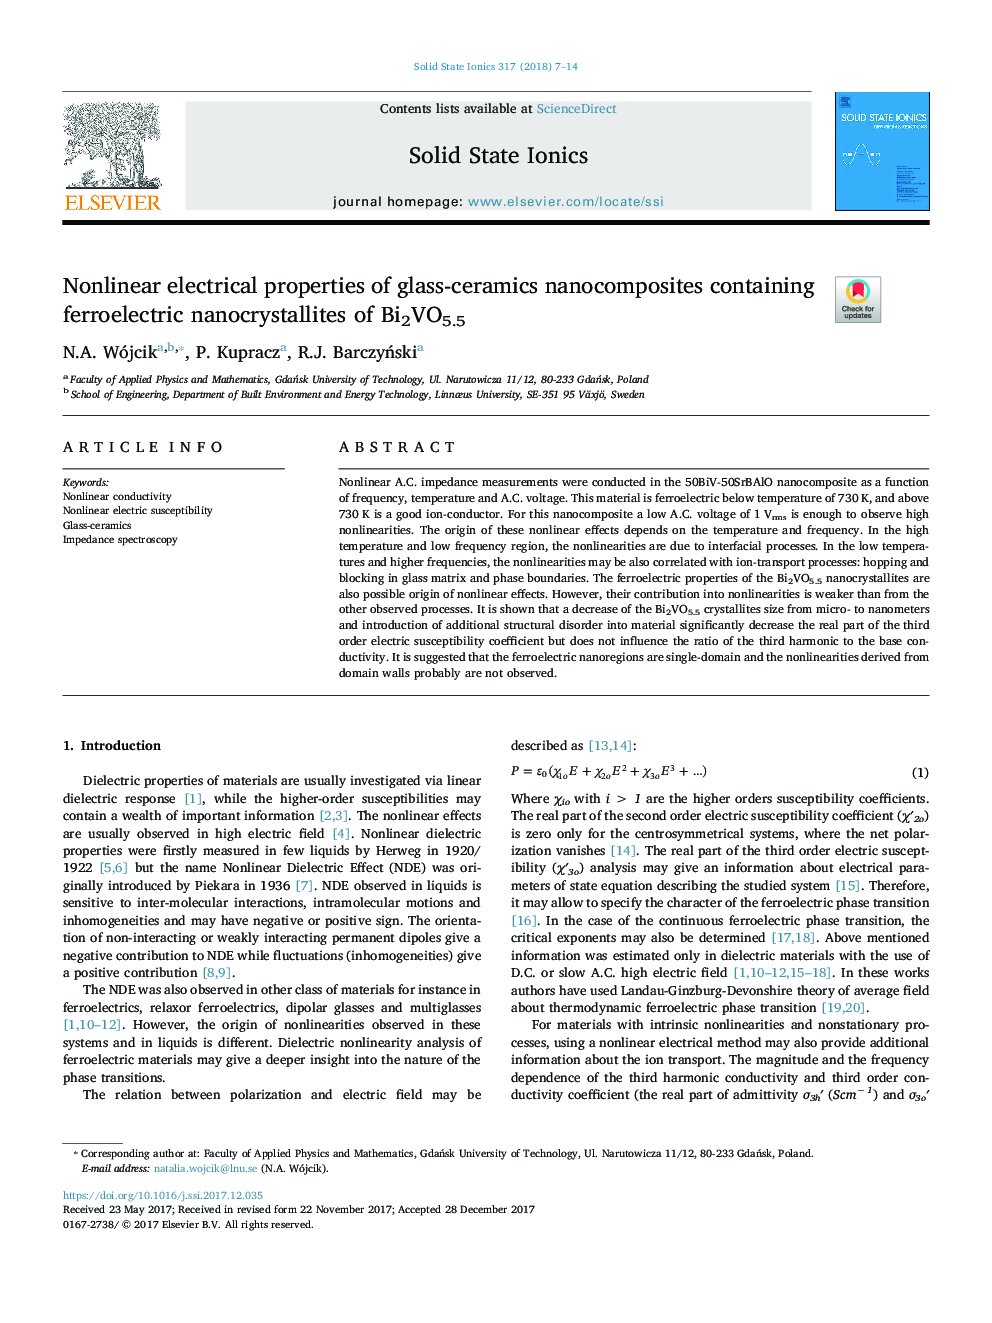 Nonlinear electrical properties of glass-ceramics nanocomposites containing ferroelectric nanocrystallites of Bi2VO5.5